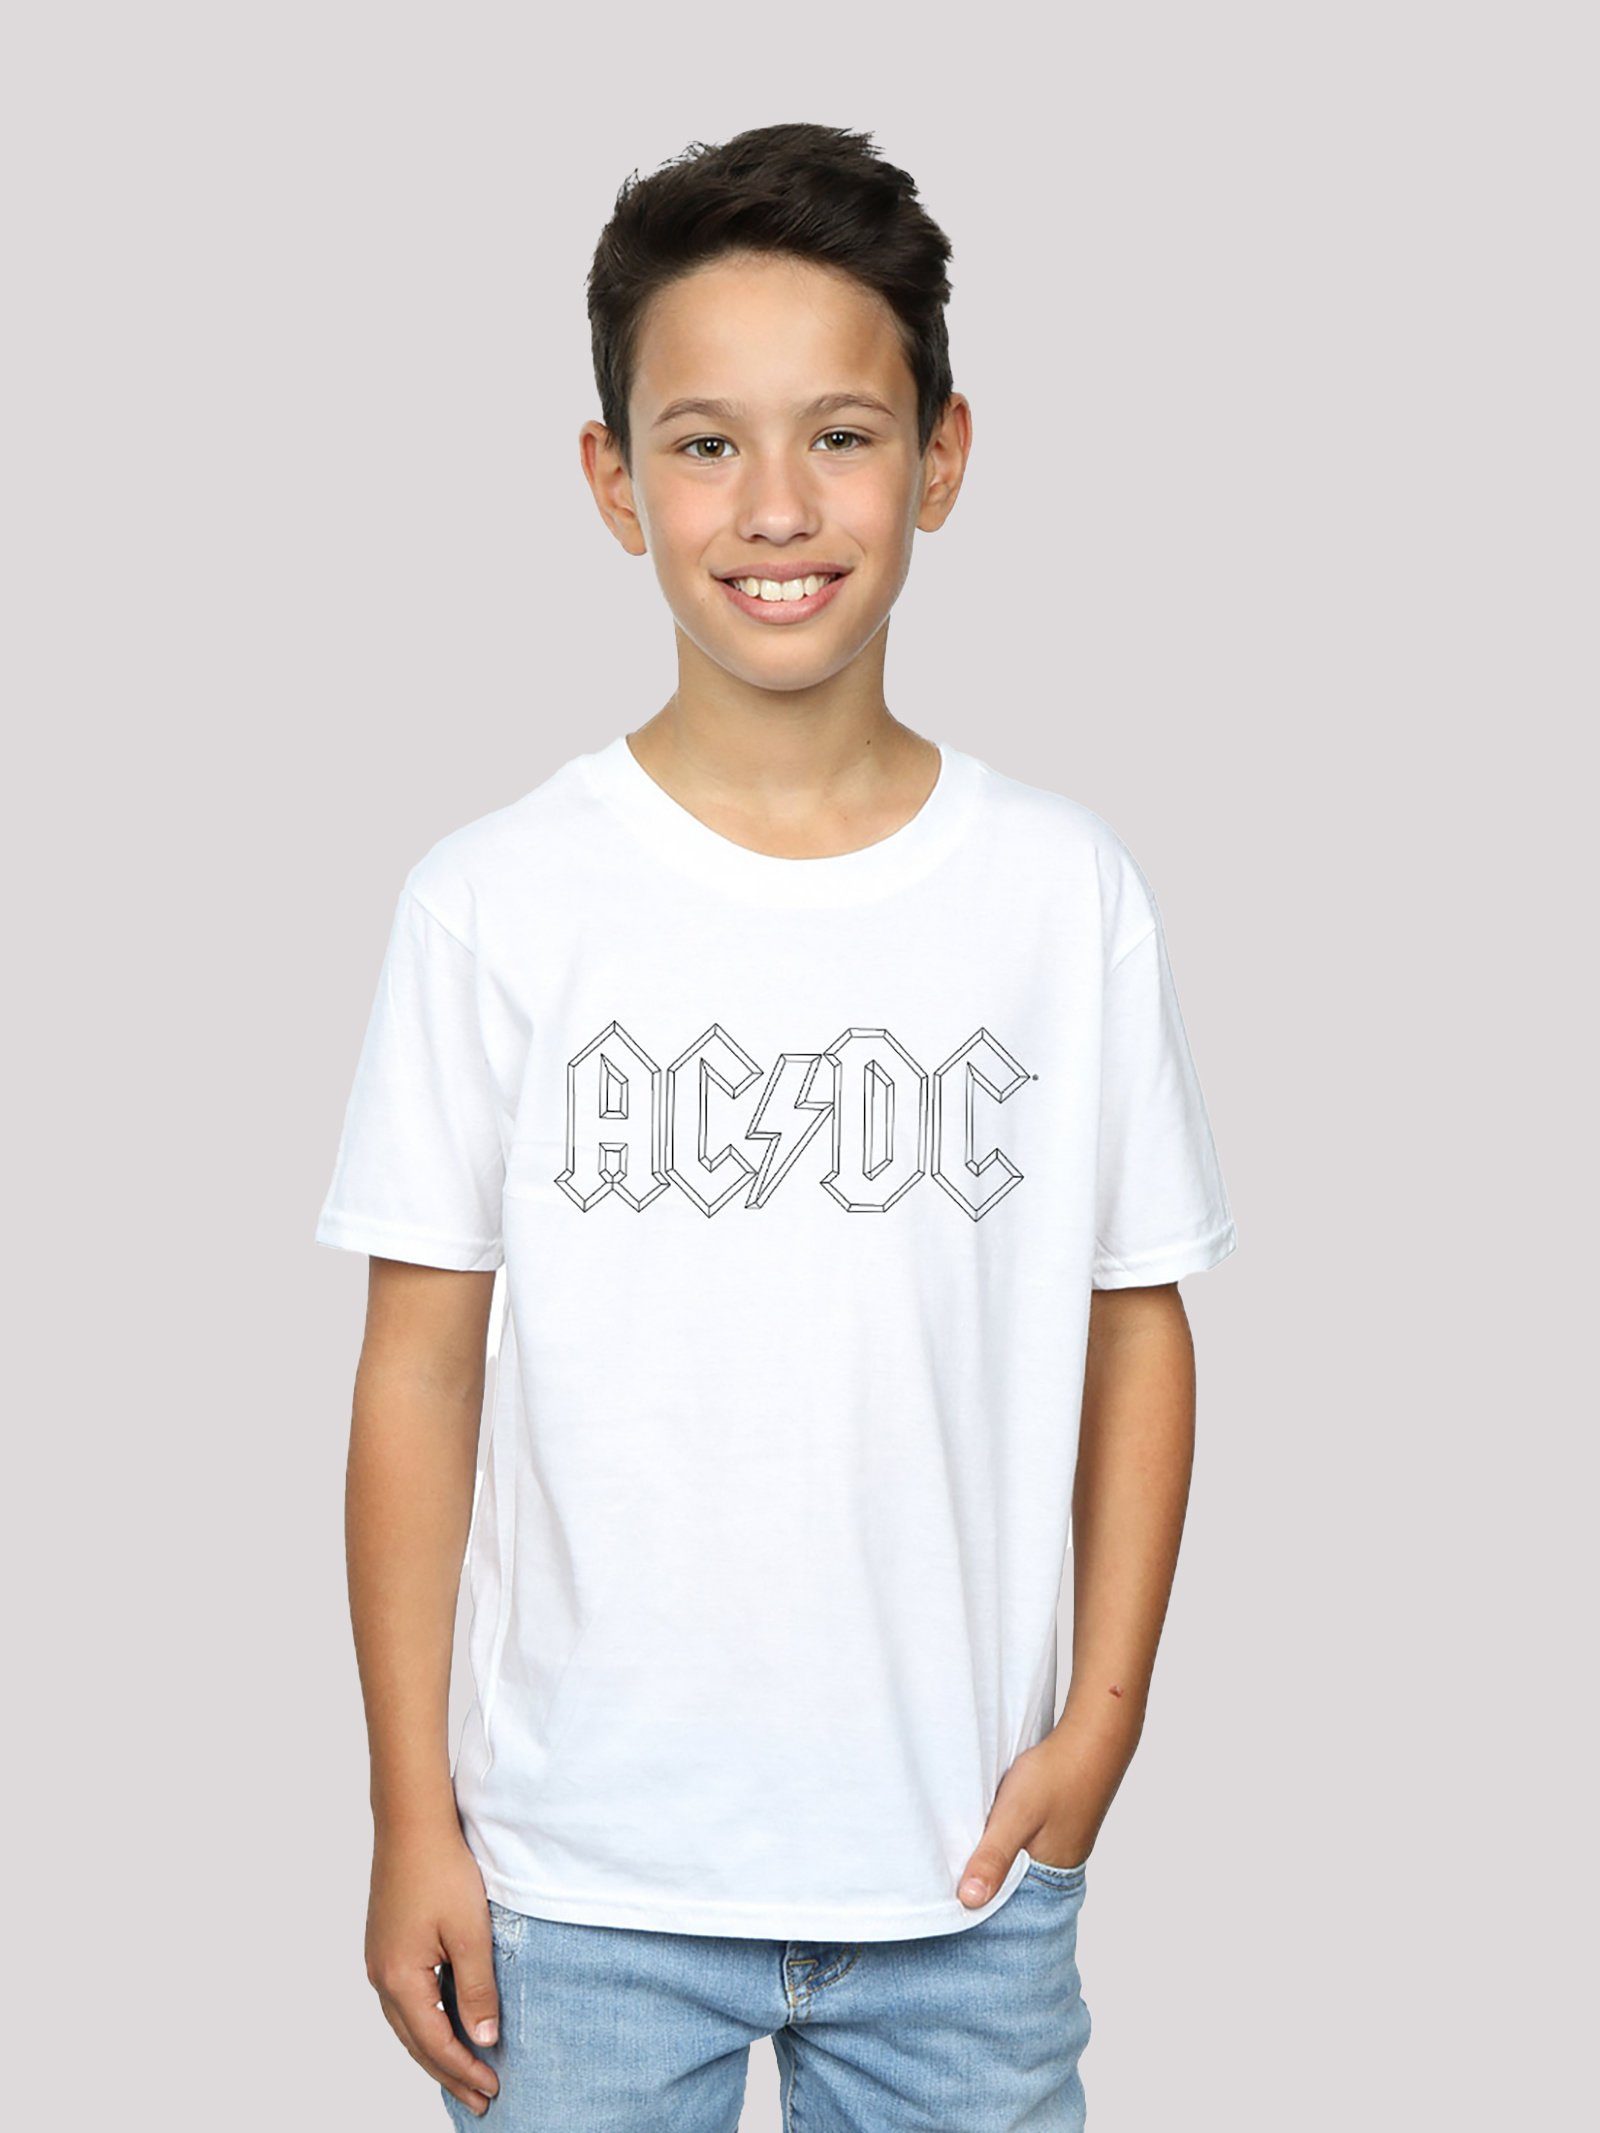 F4NT4STIC T-Shirt ACDC Black Merch,Jungen,Mädchen,Bandshirt Unisex Rock Outline Fan Kinder,Premium Musik Metal Premium Logo Merch 